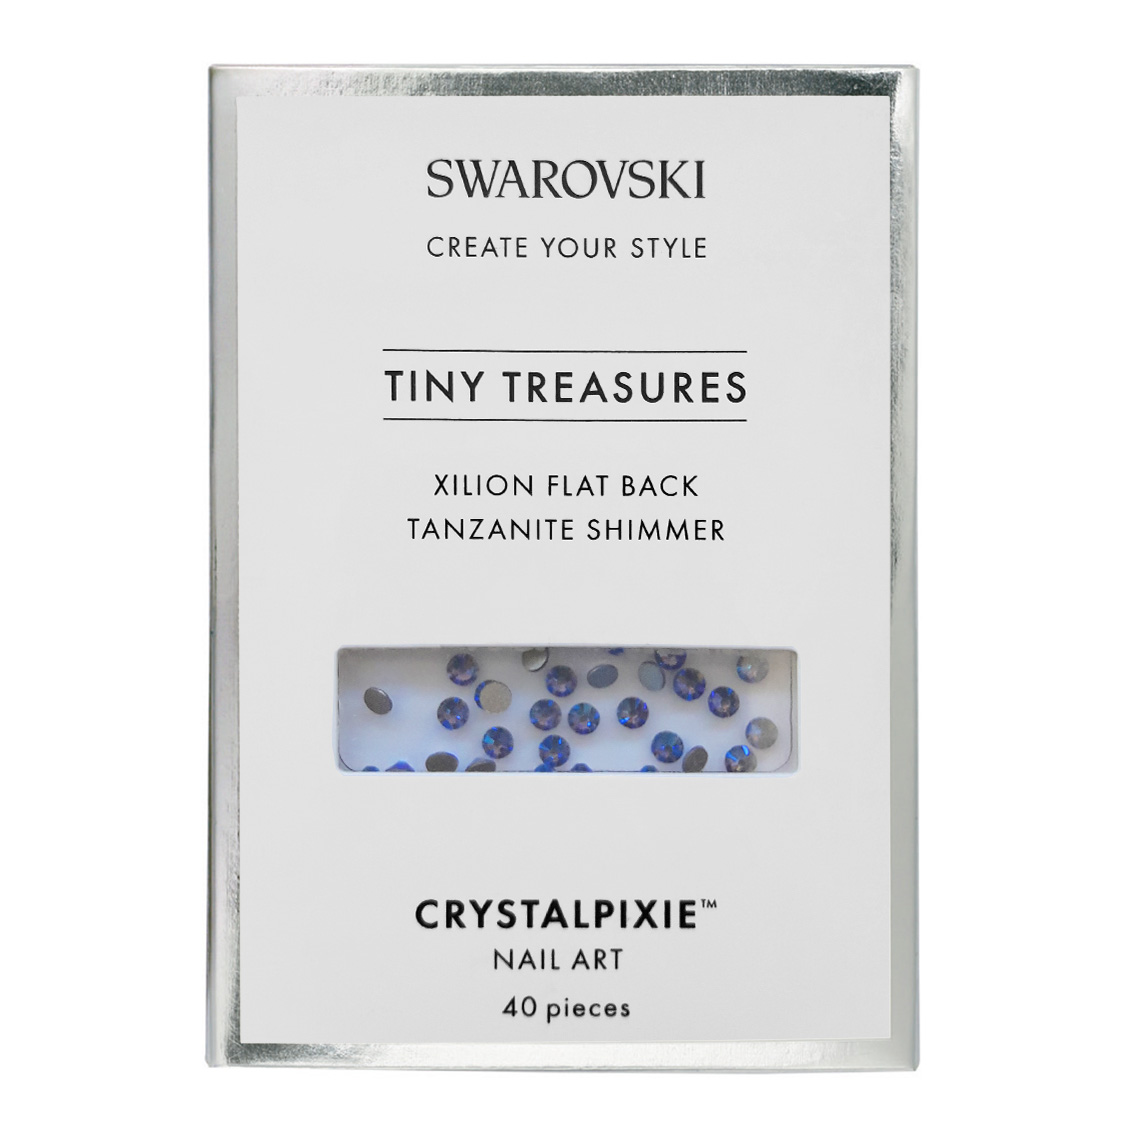 Xilion Flat Back - Tanzanite Shimmer 40 pz - Swarovski Tiny Treasures